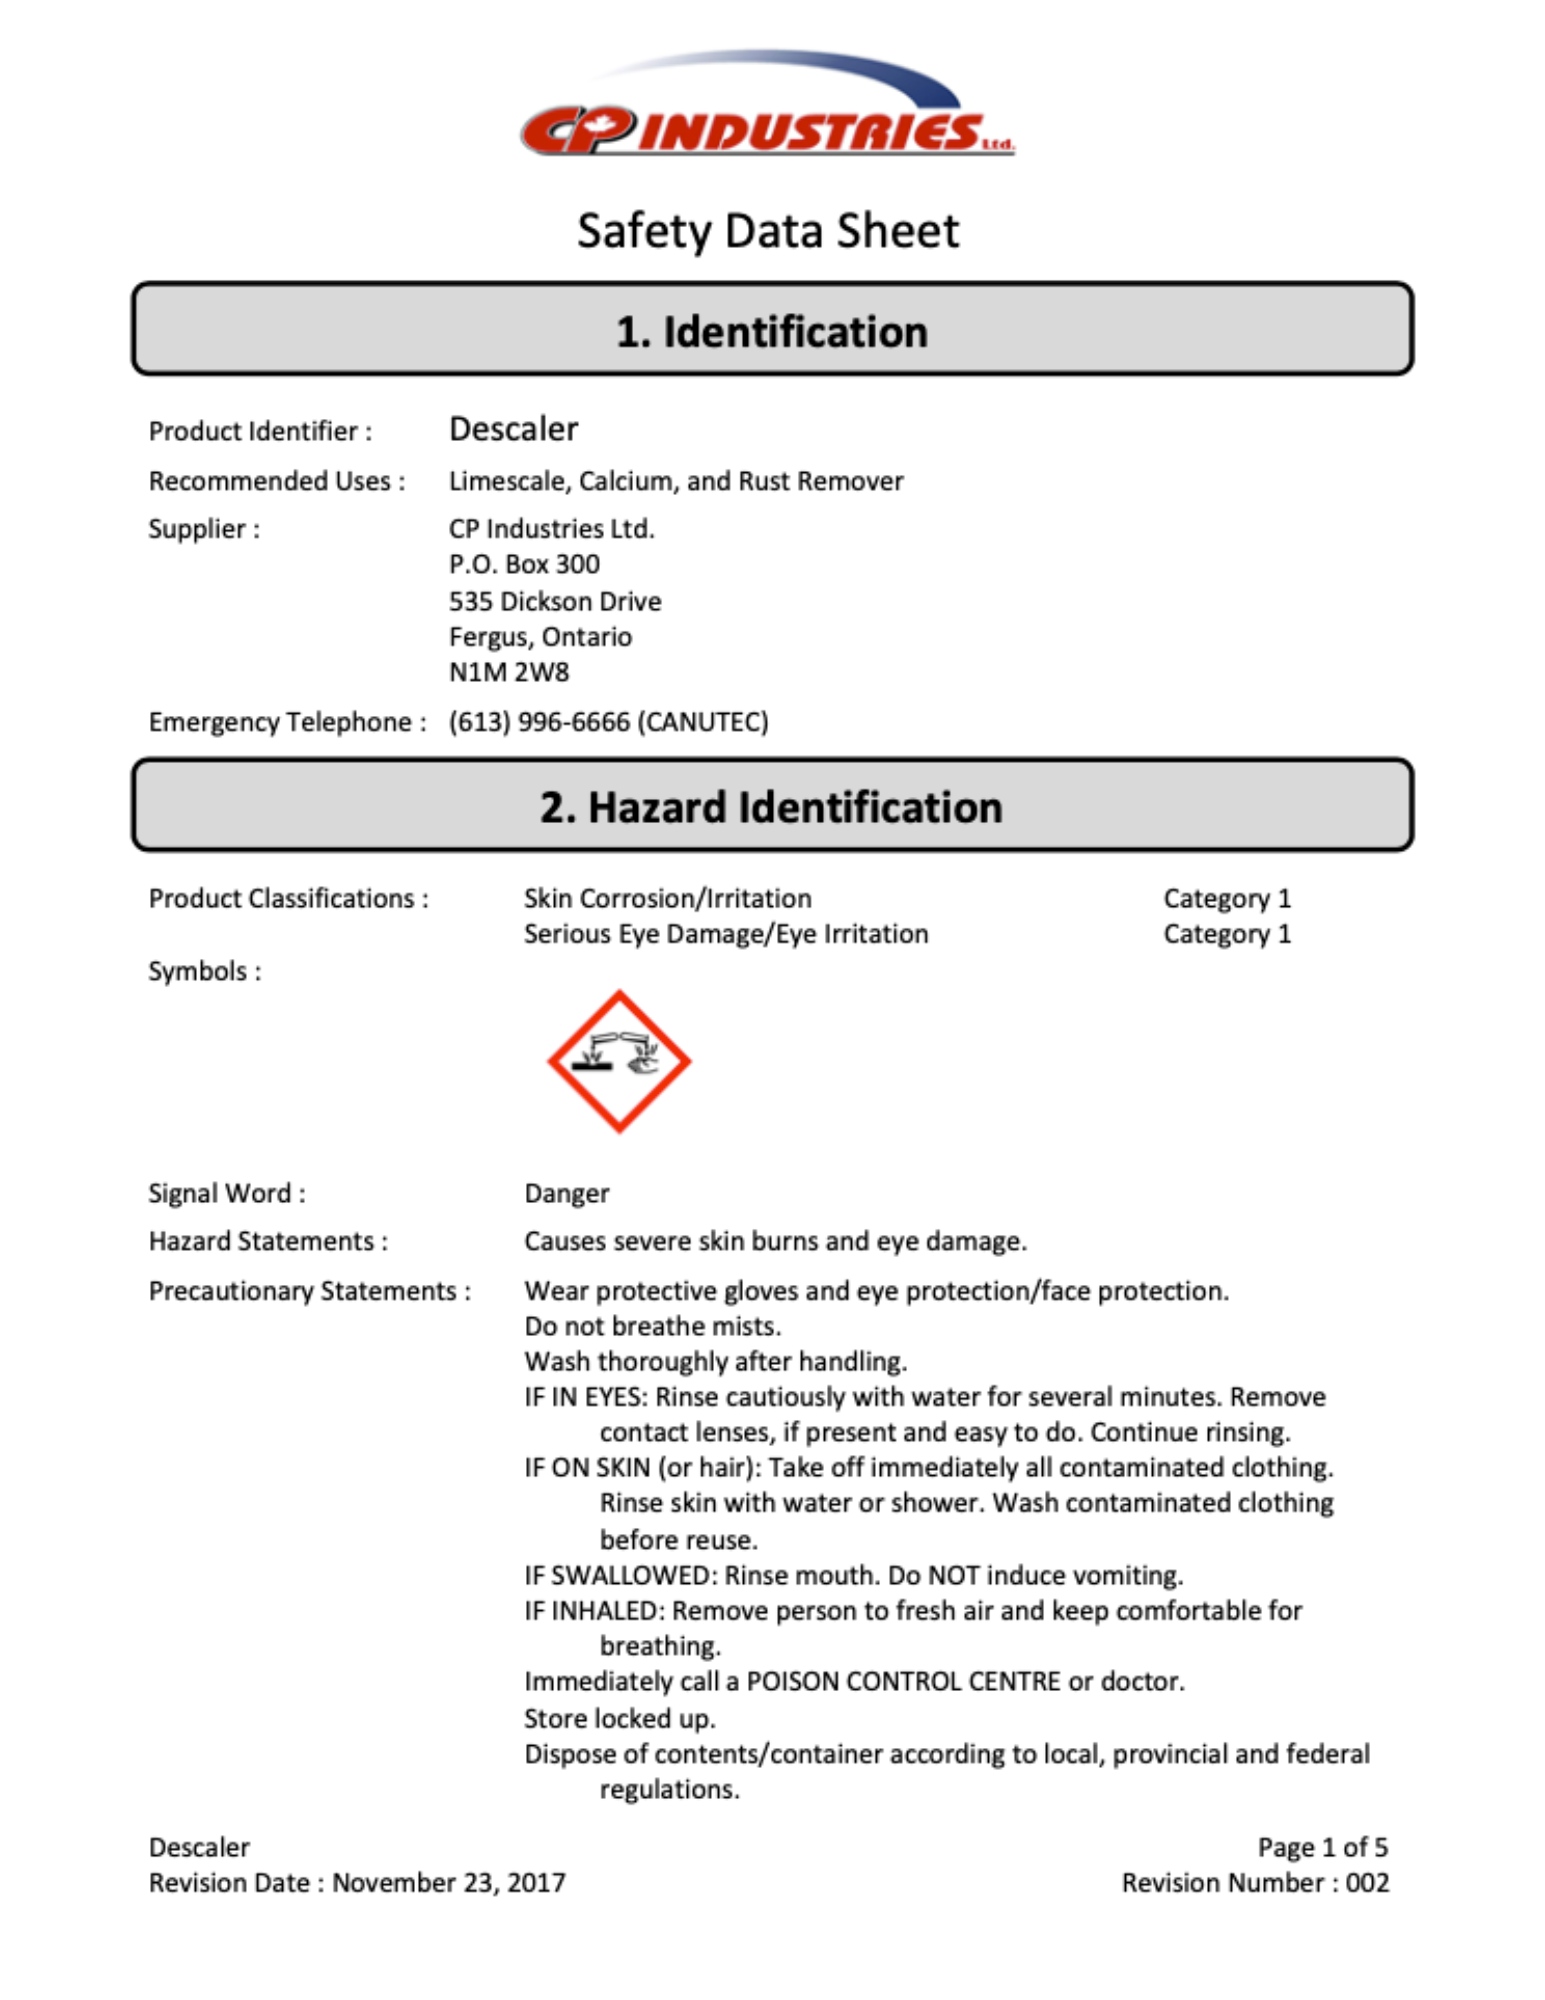 Safety Data Sheet of CP Industries Descaler.